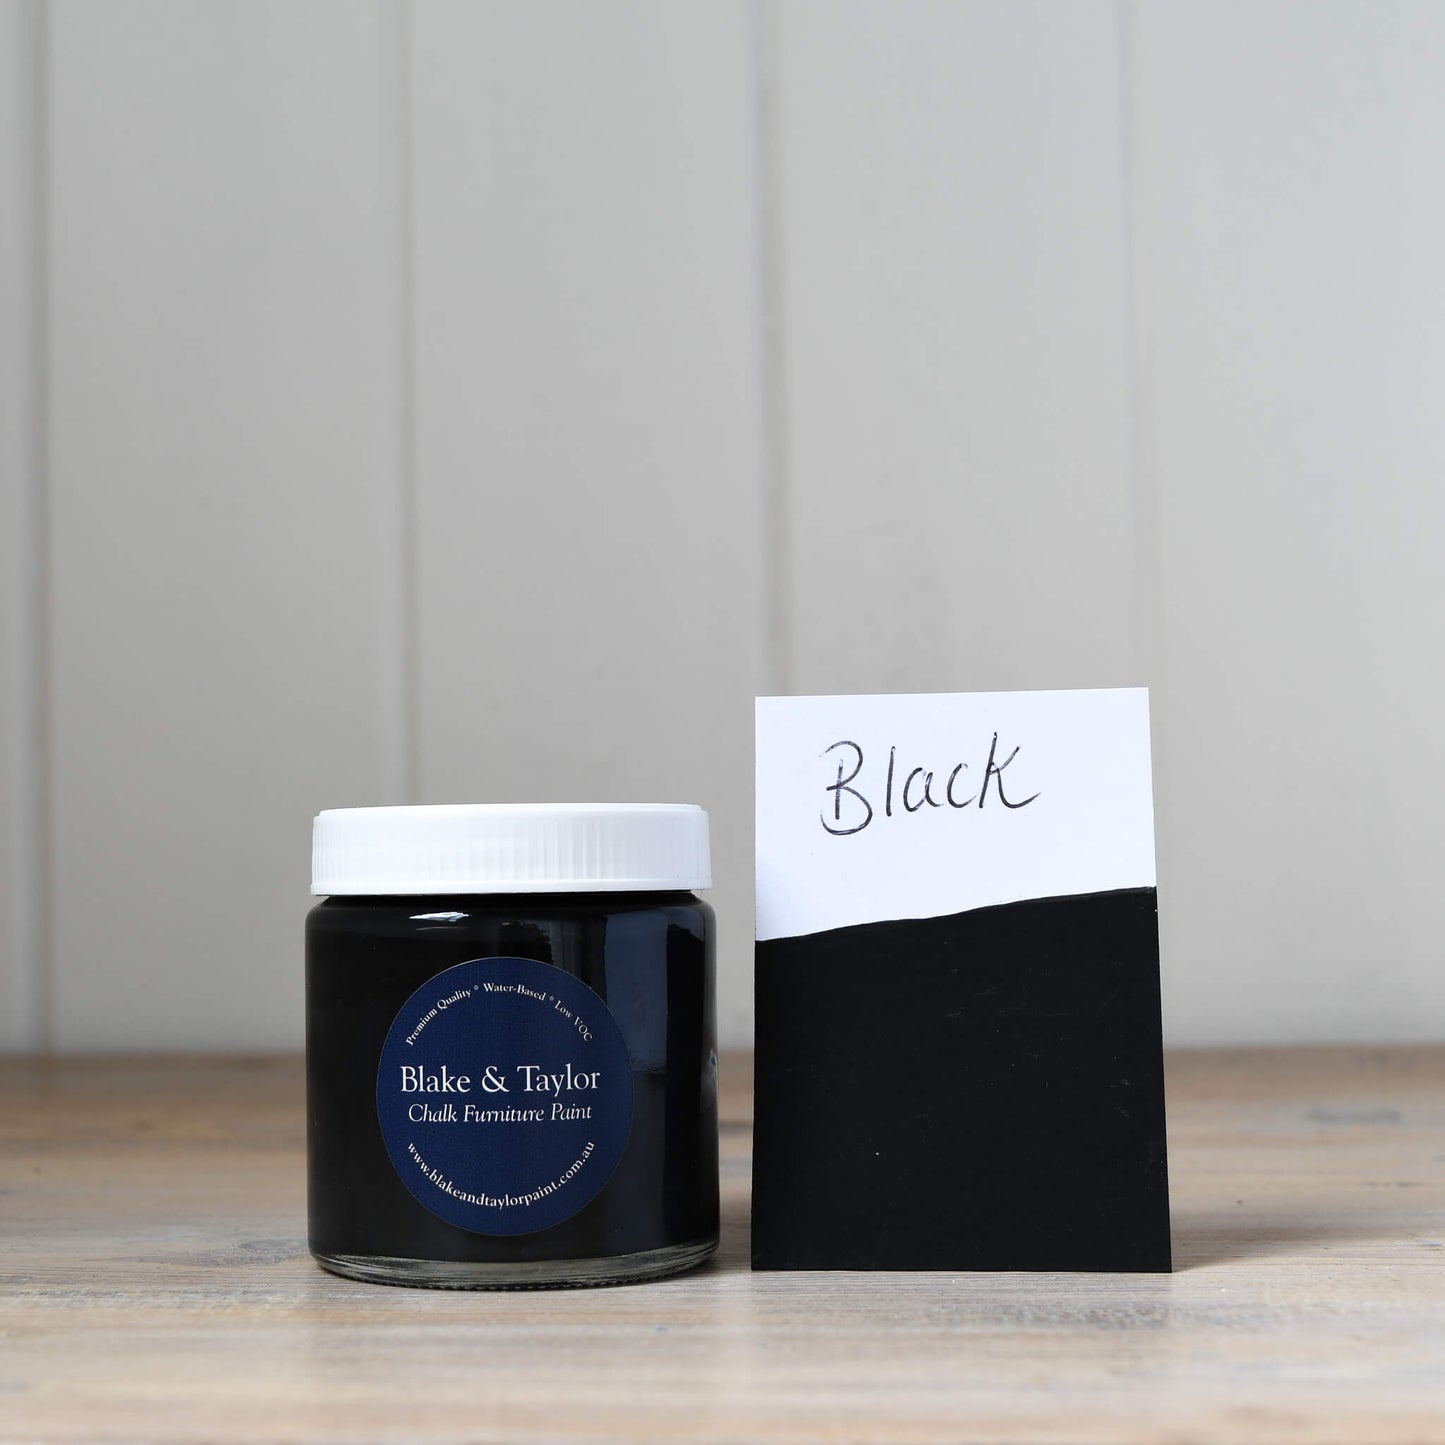 120ml pot of Black Blake & Taylor Chalk Furniture Paint